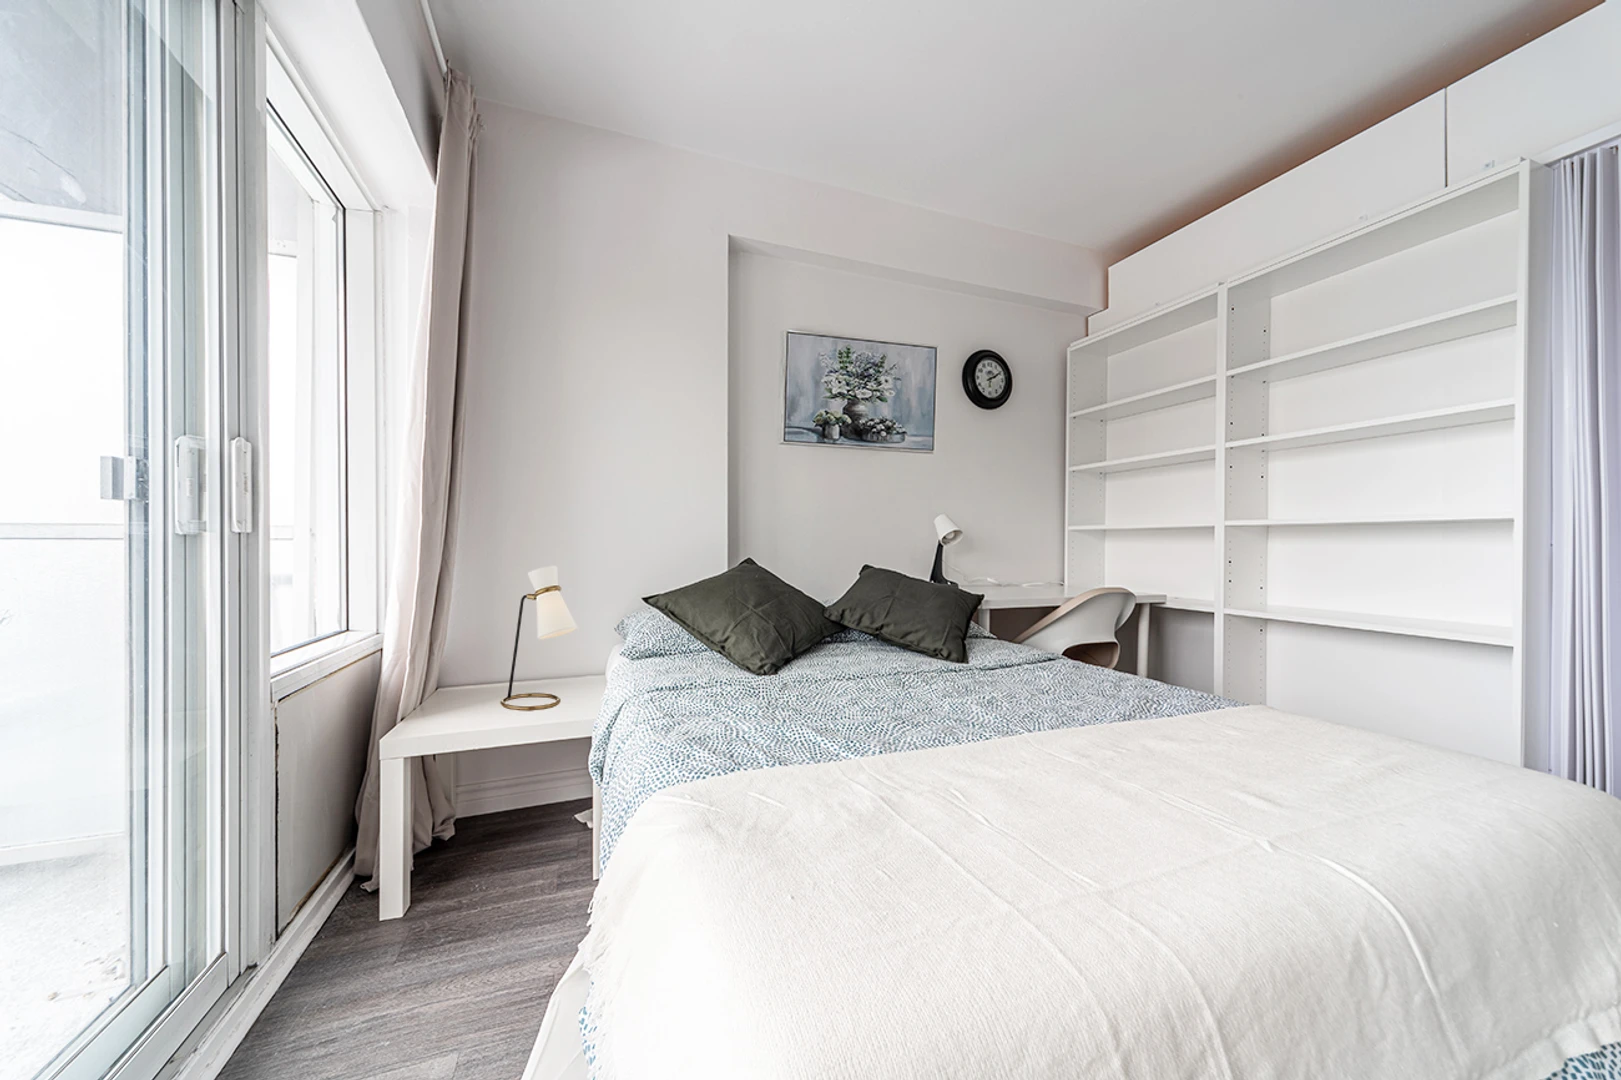 Alquiler de habitación en piso compartido en Montréal